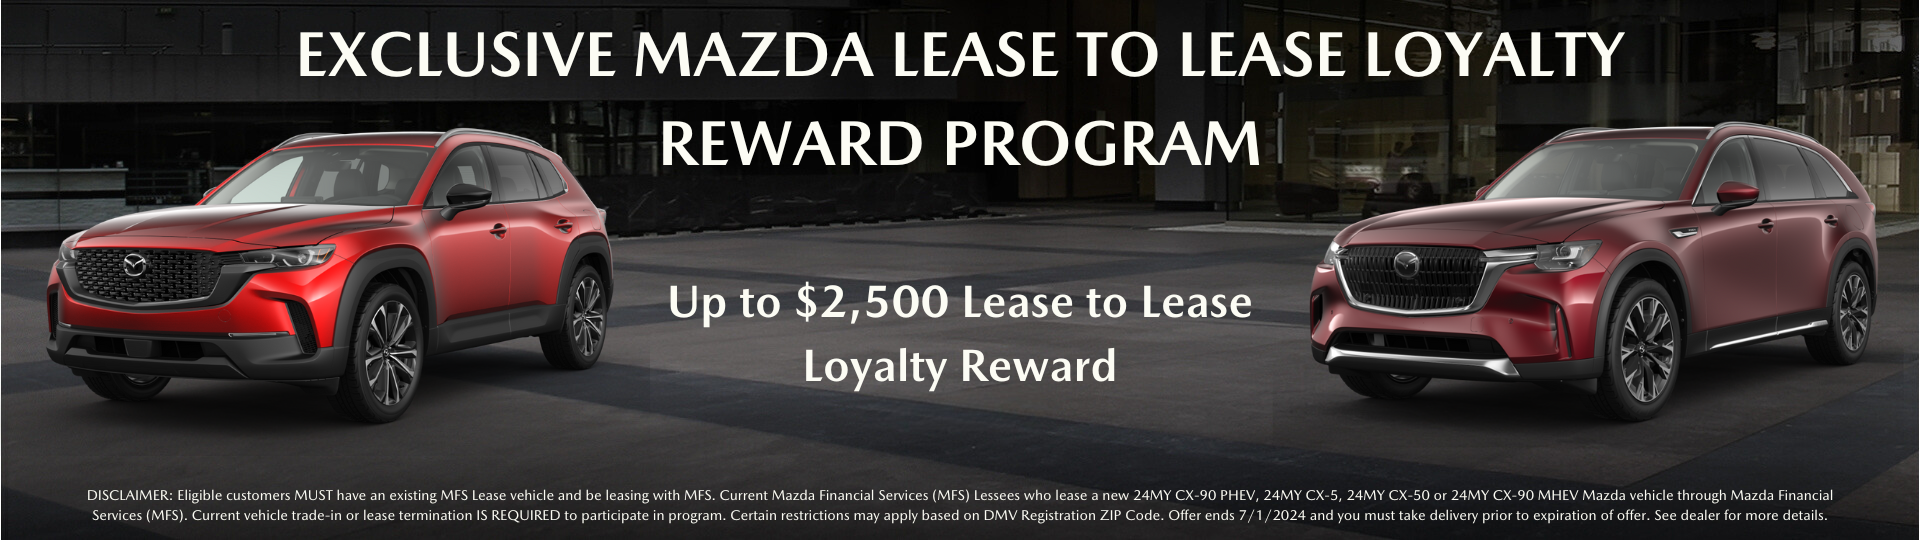 Lease to Lease loyalty reward program